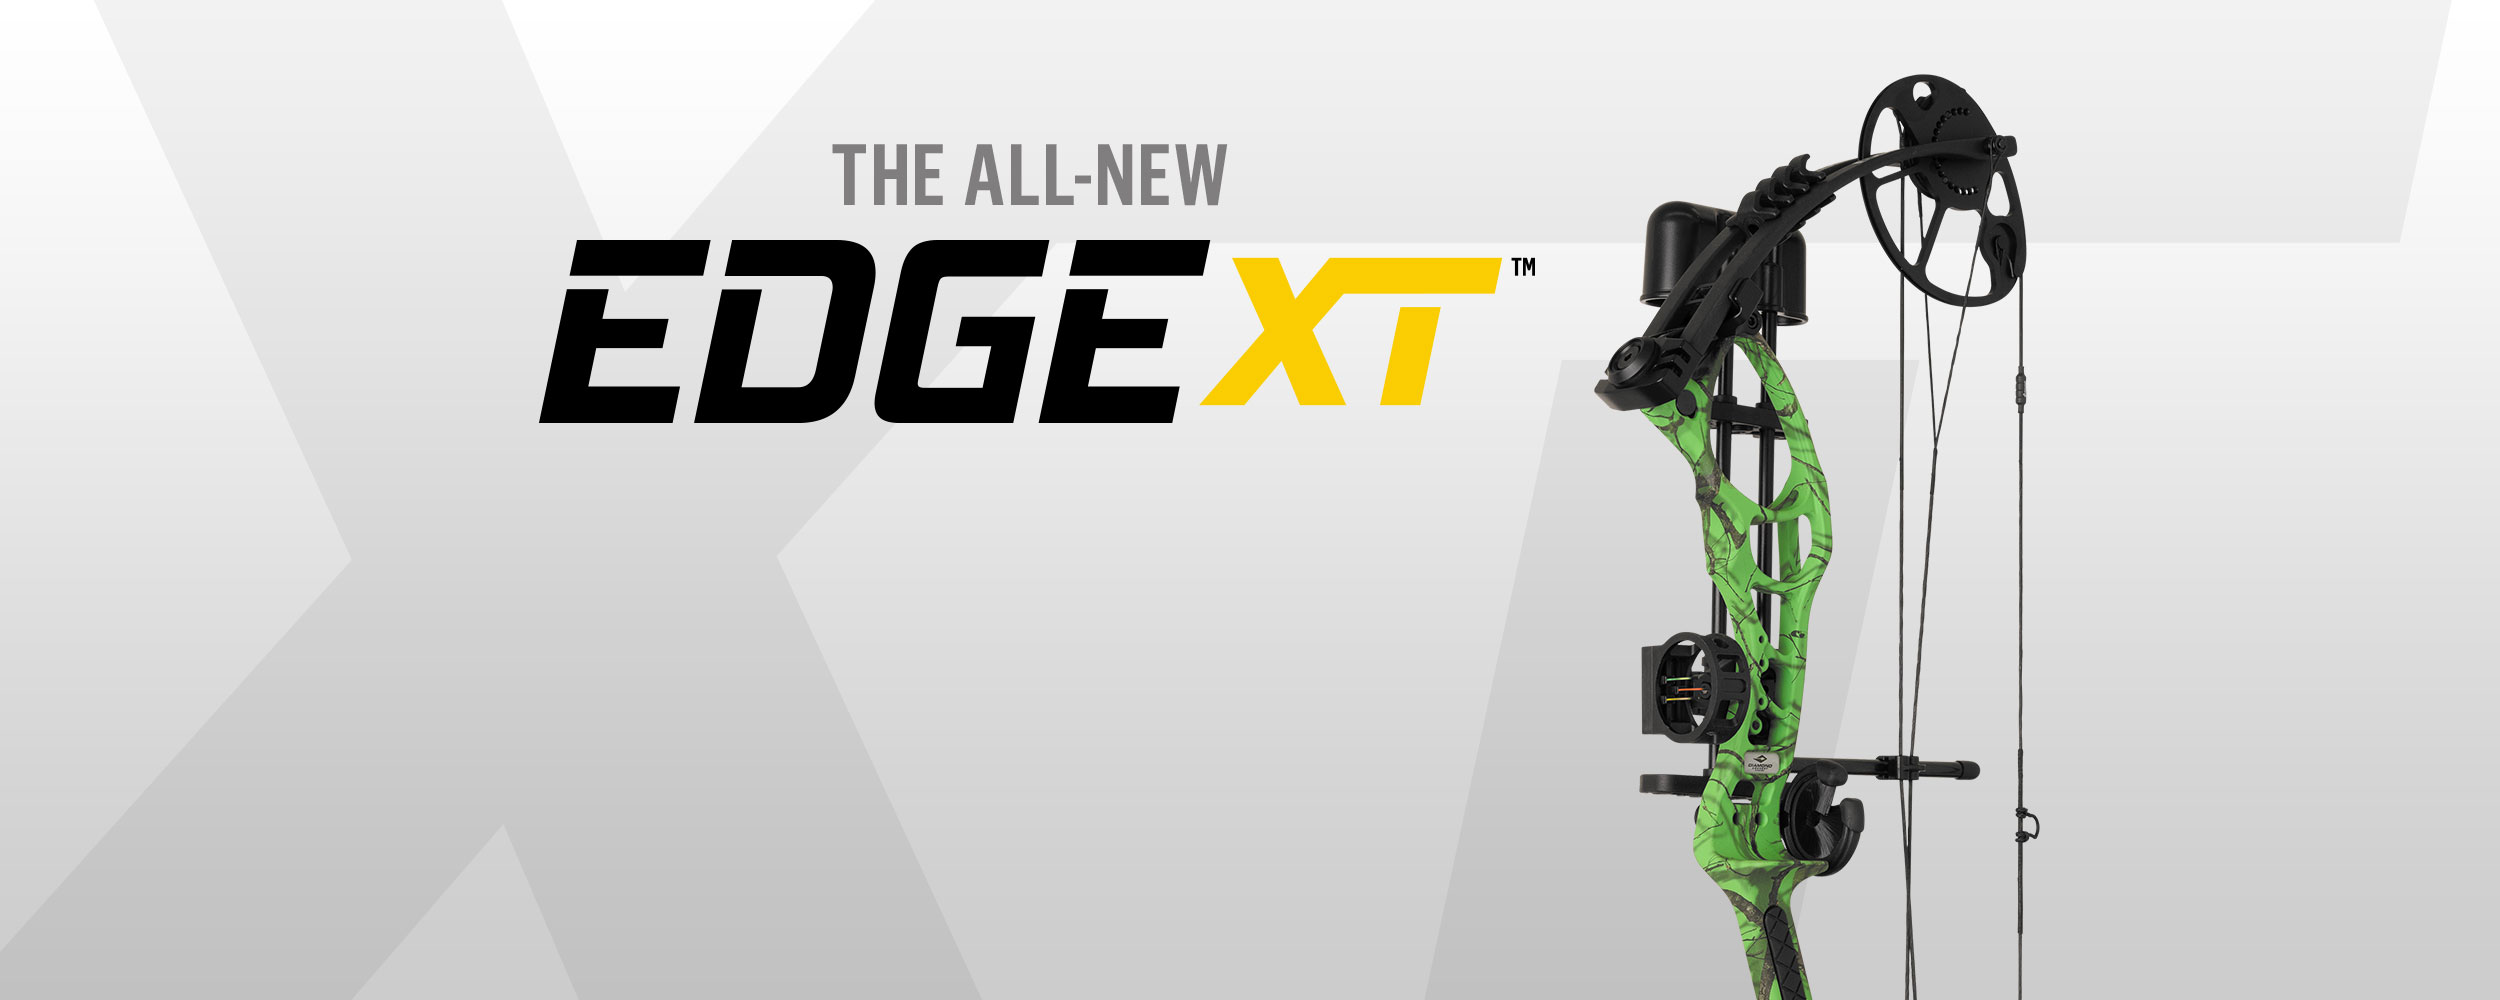 Edge XT desktop banner